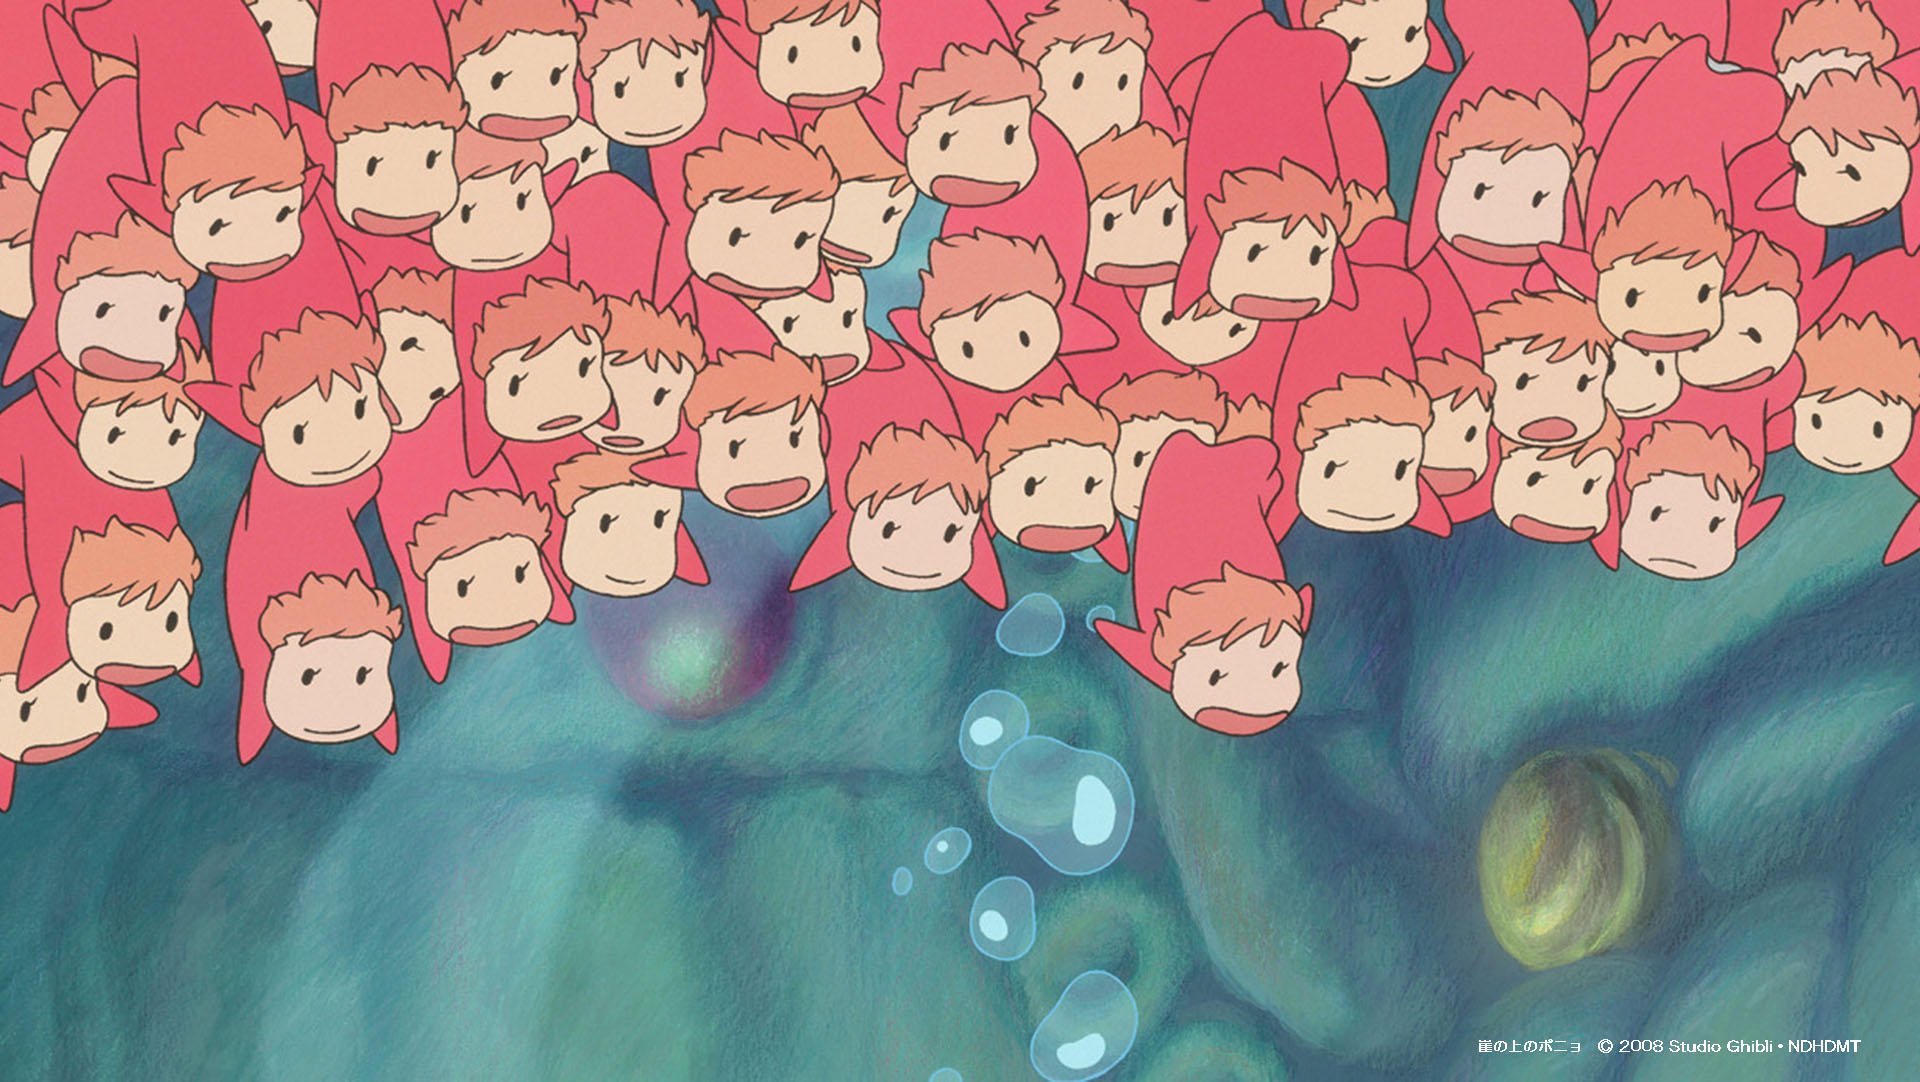 Ponyo's background from Studio Ghibli